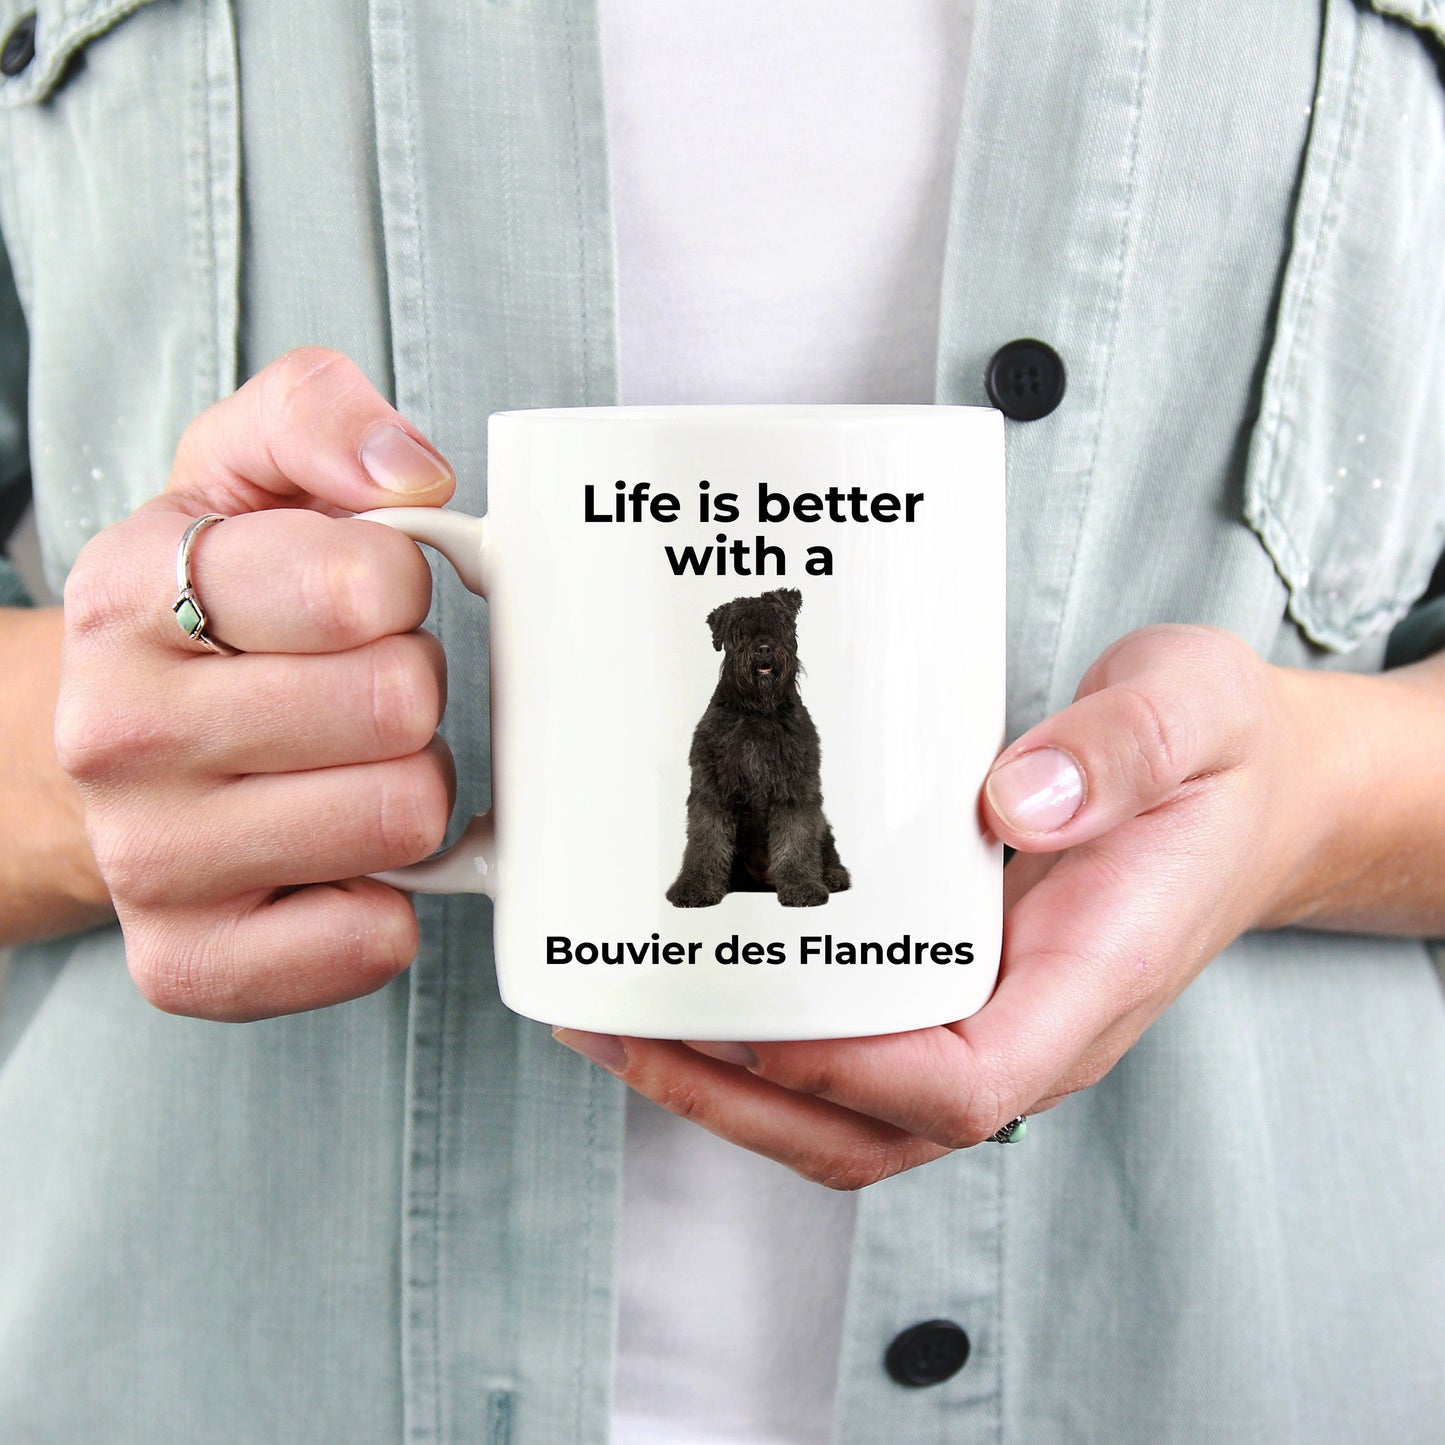 Bouvier des Flandres Mug - Life is better with a Bouvier